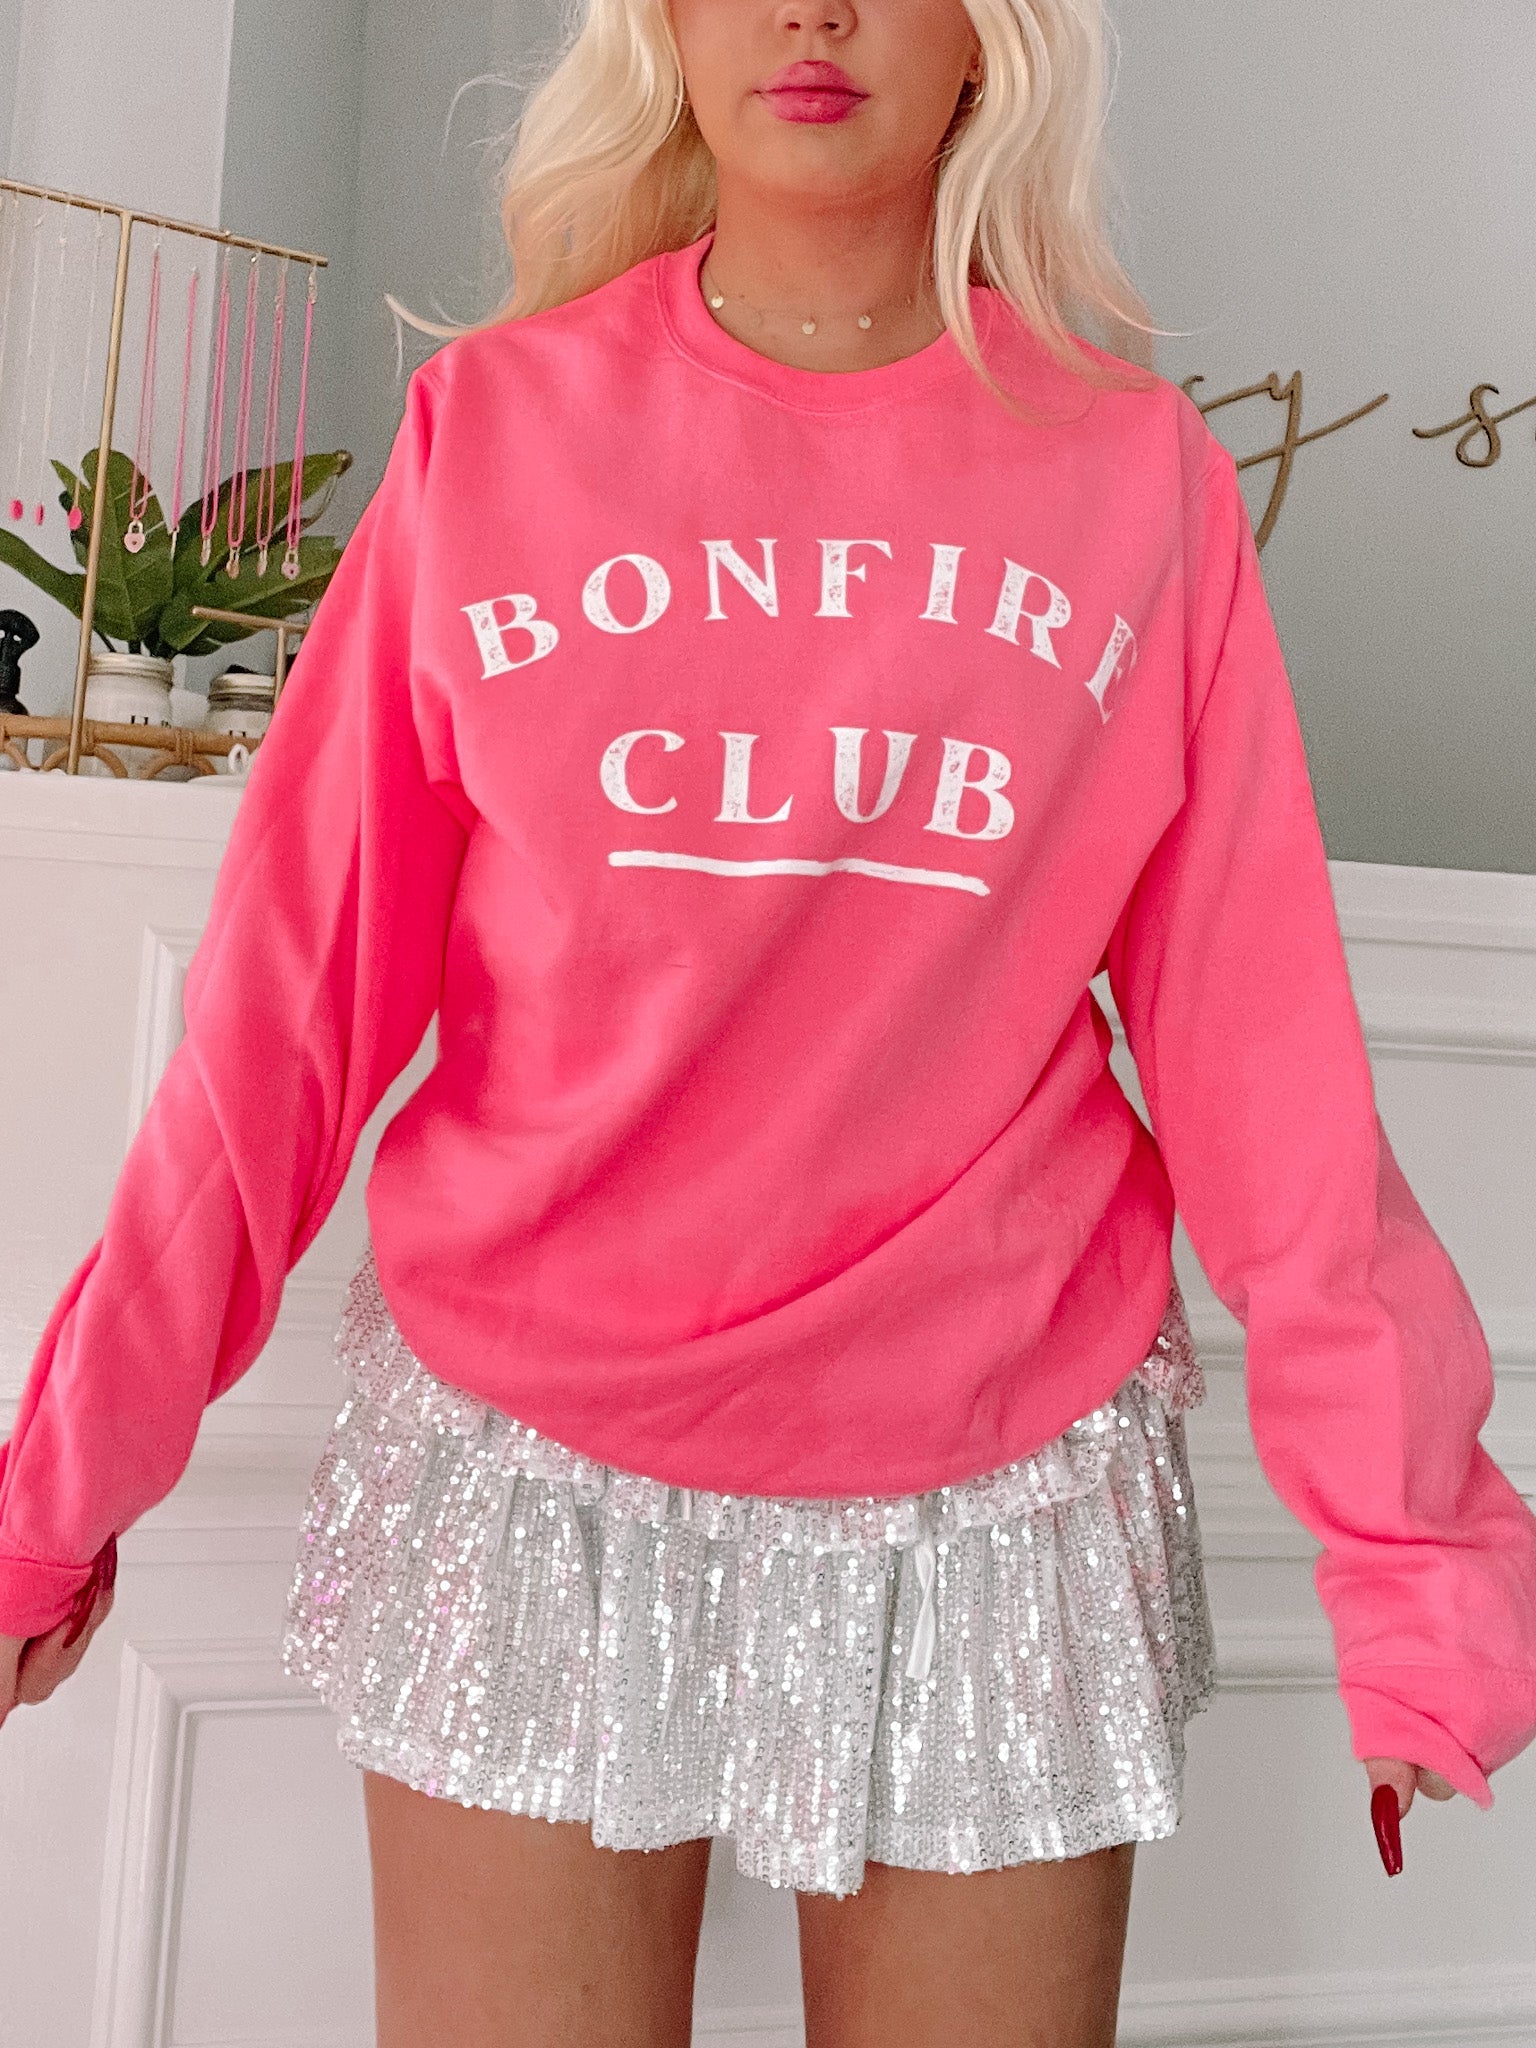 Bonfire Club Crewneck | Sassy Shortcake | sassyshortcake.com